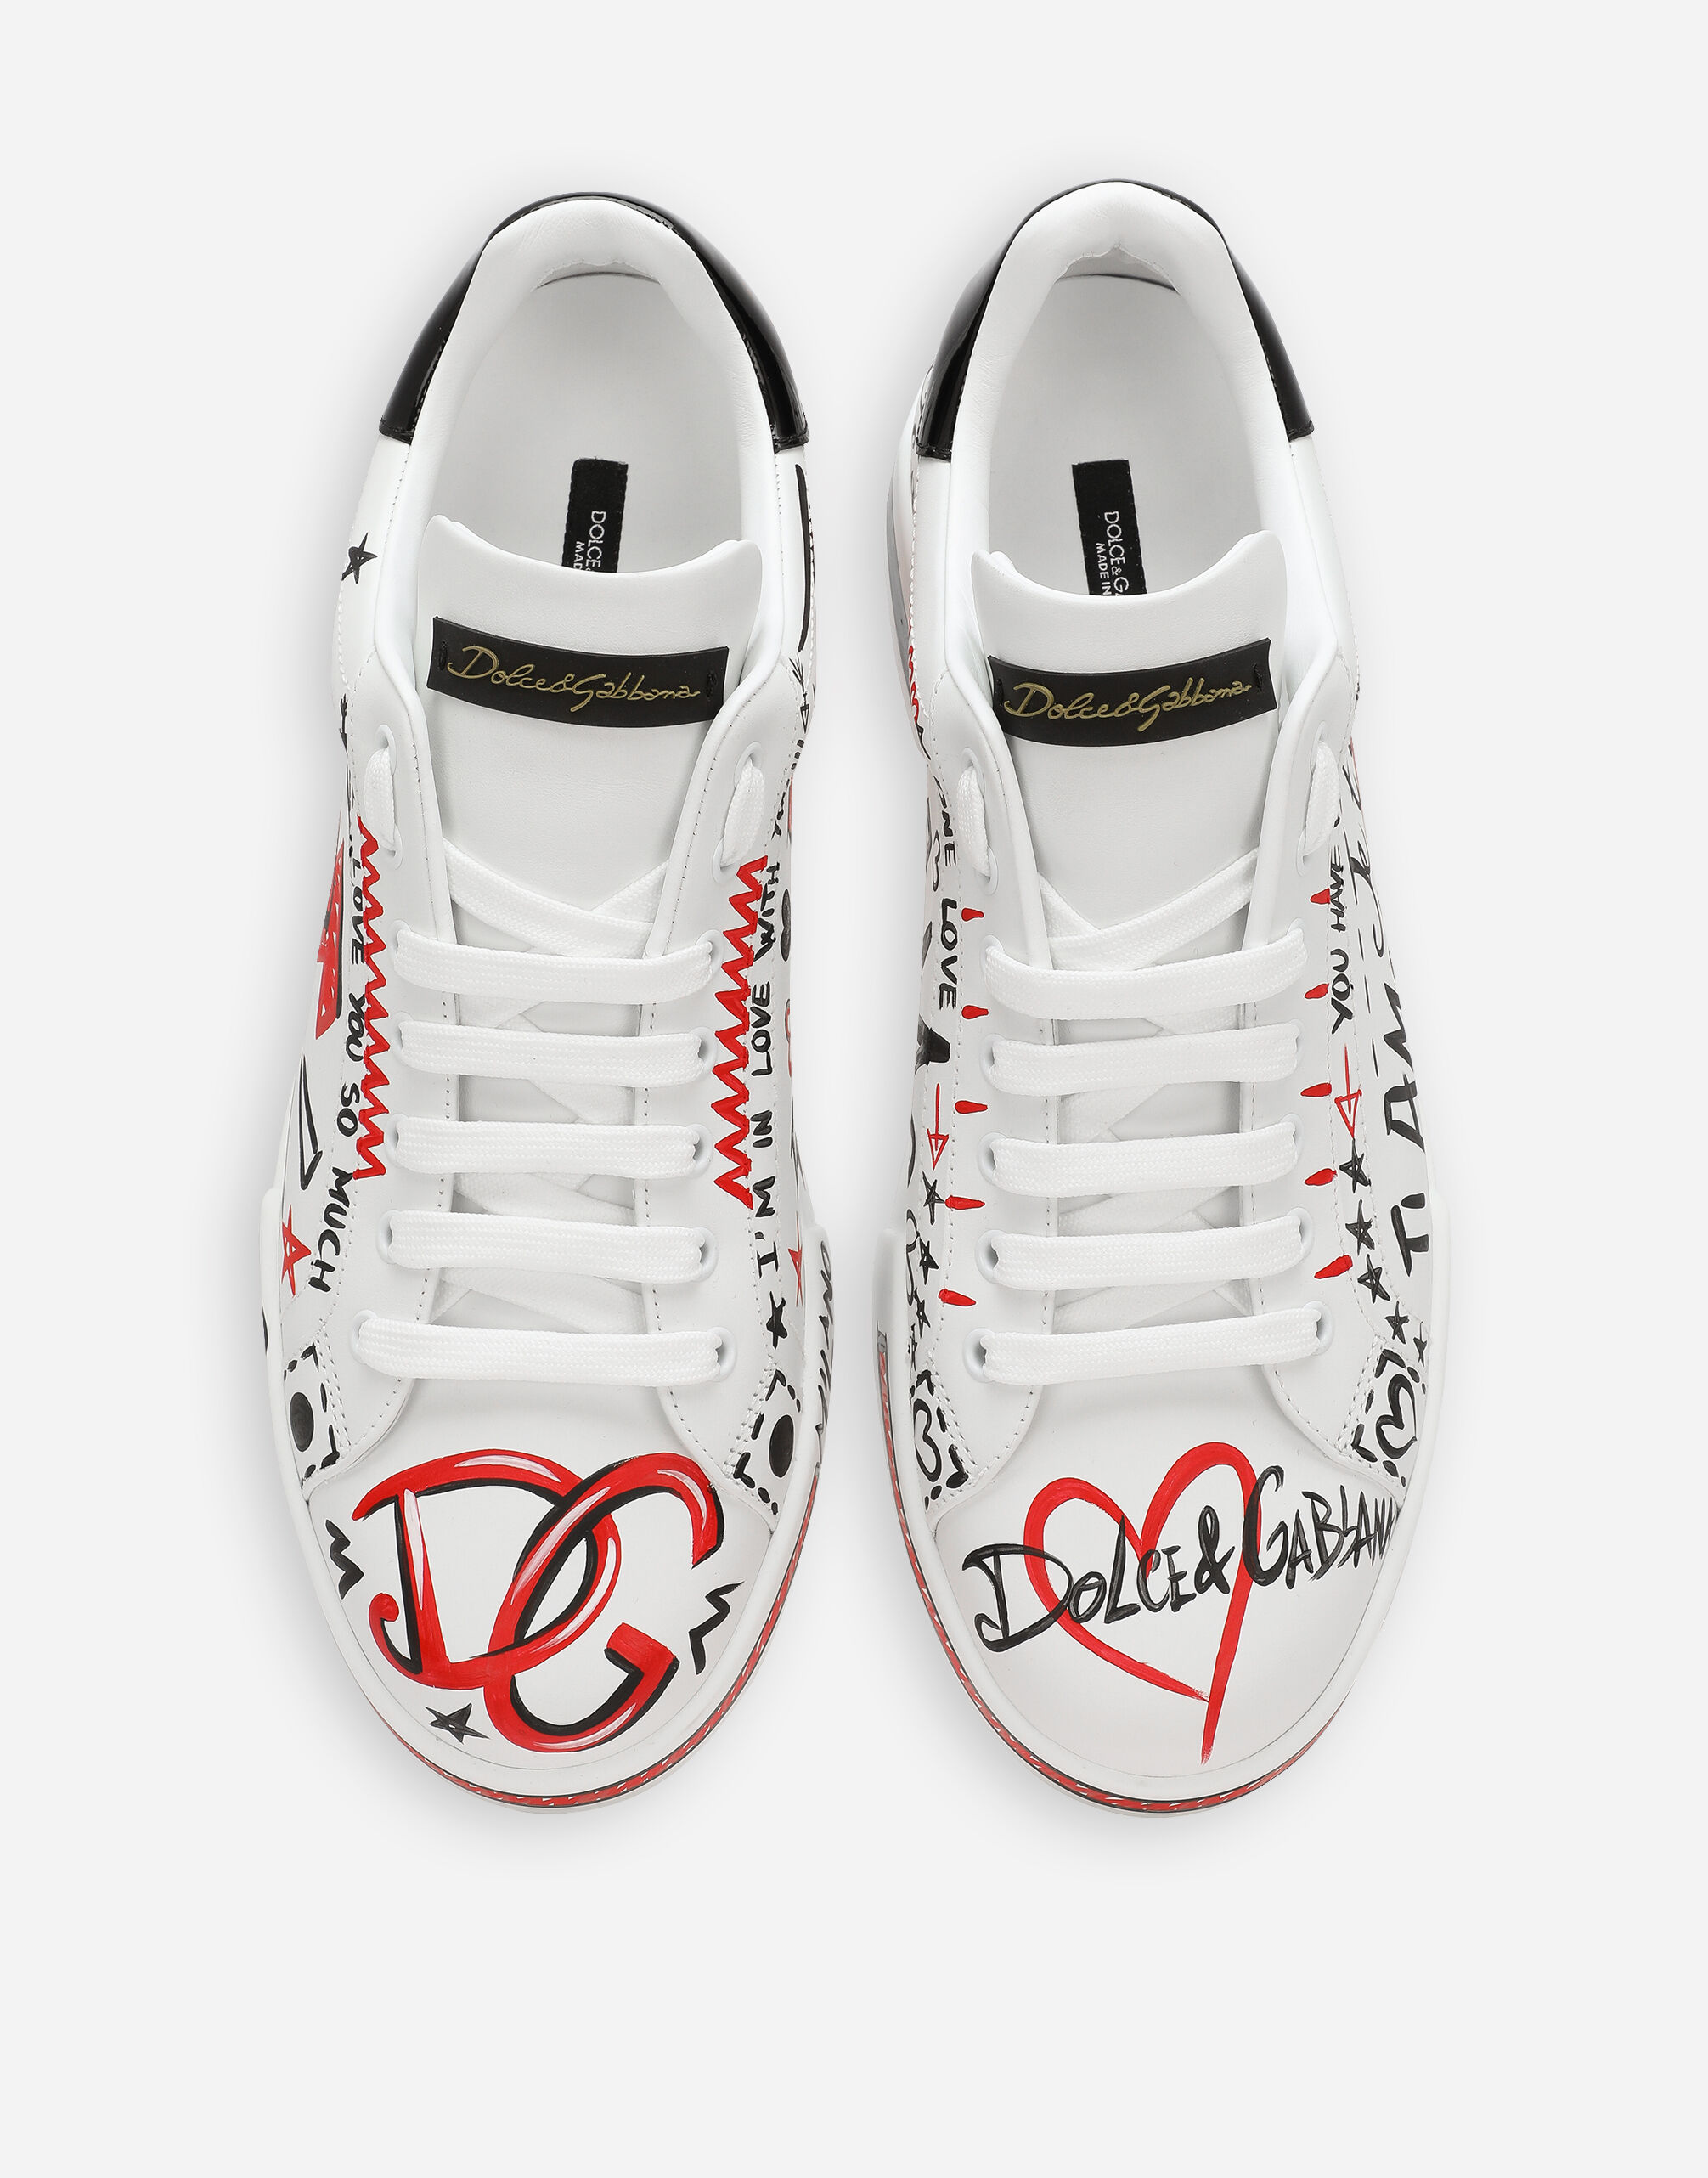 Portofino Love DG sneakers